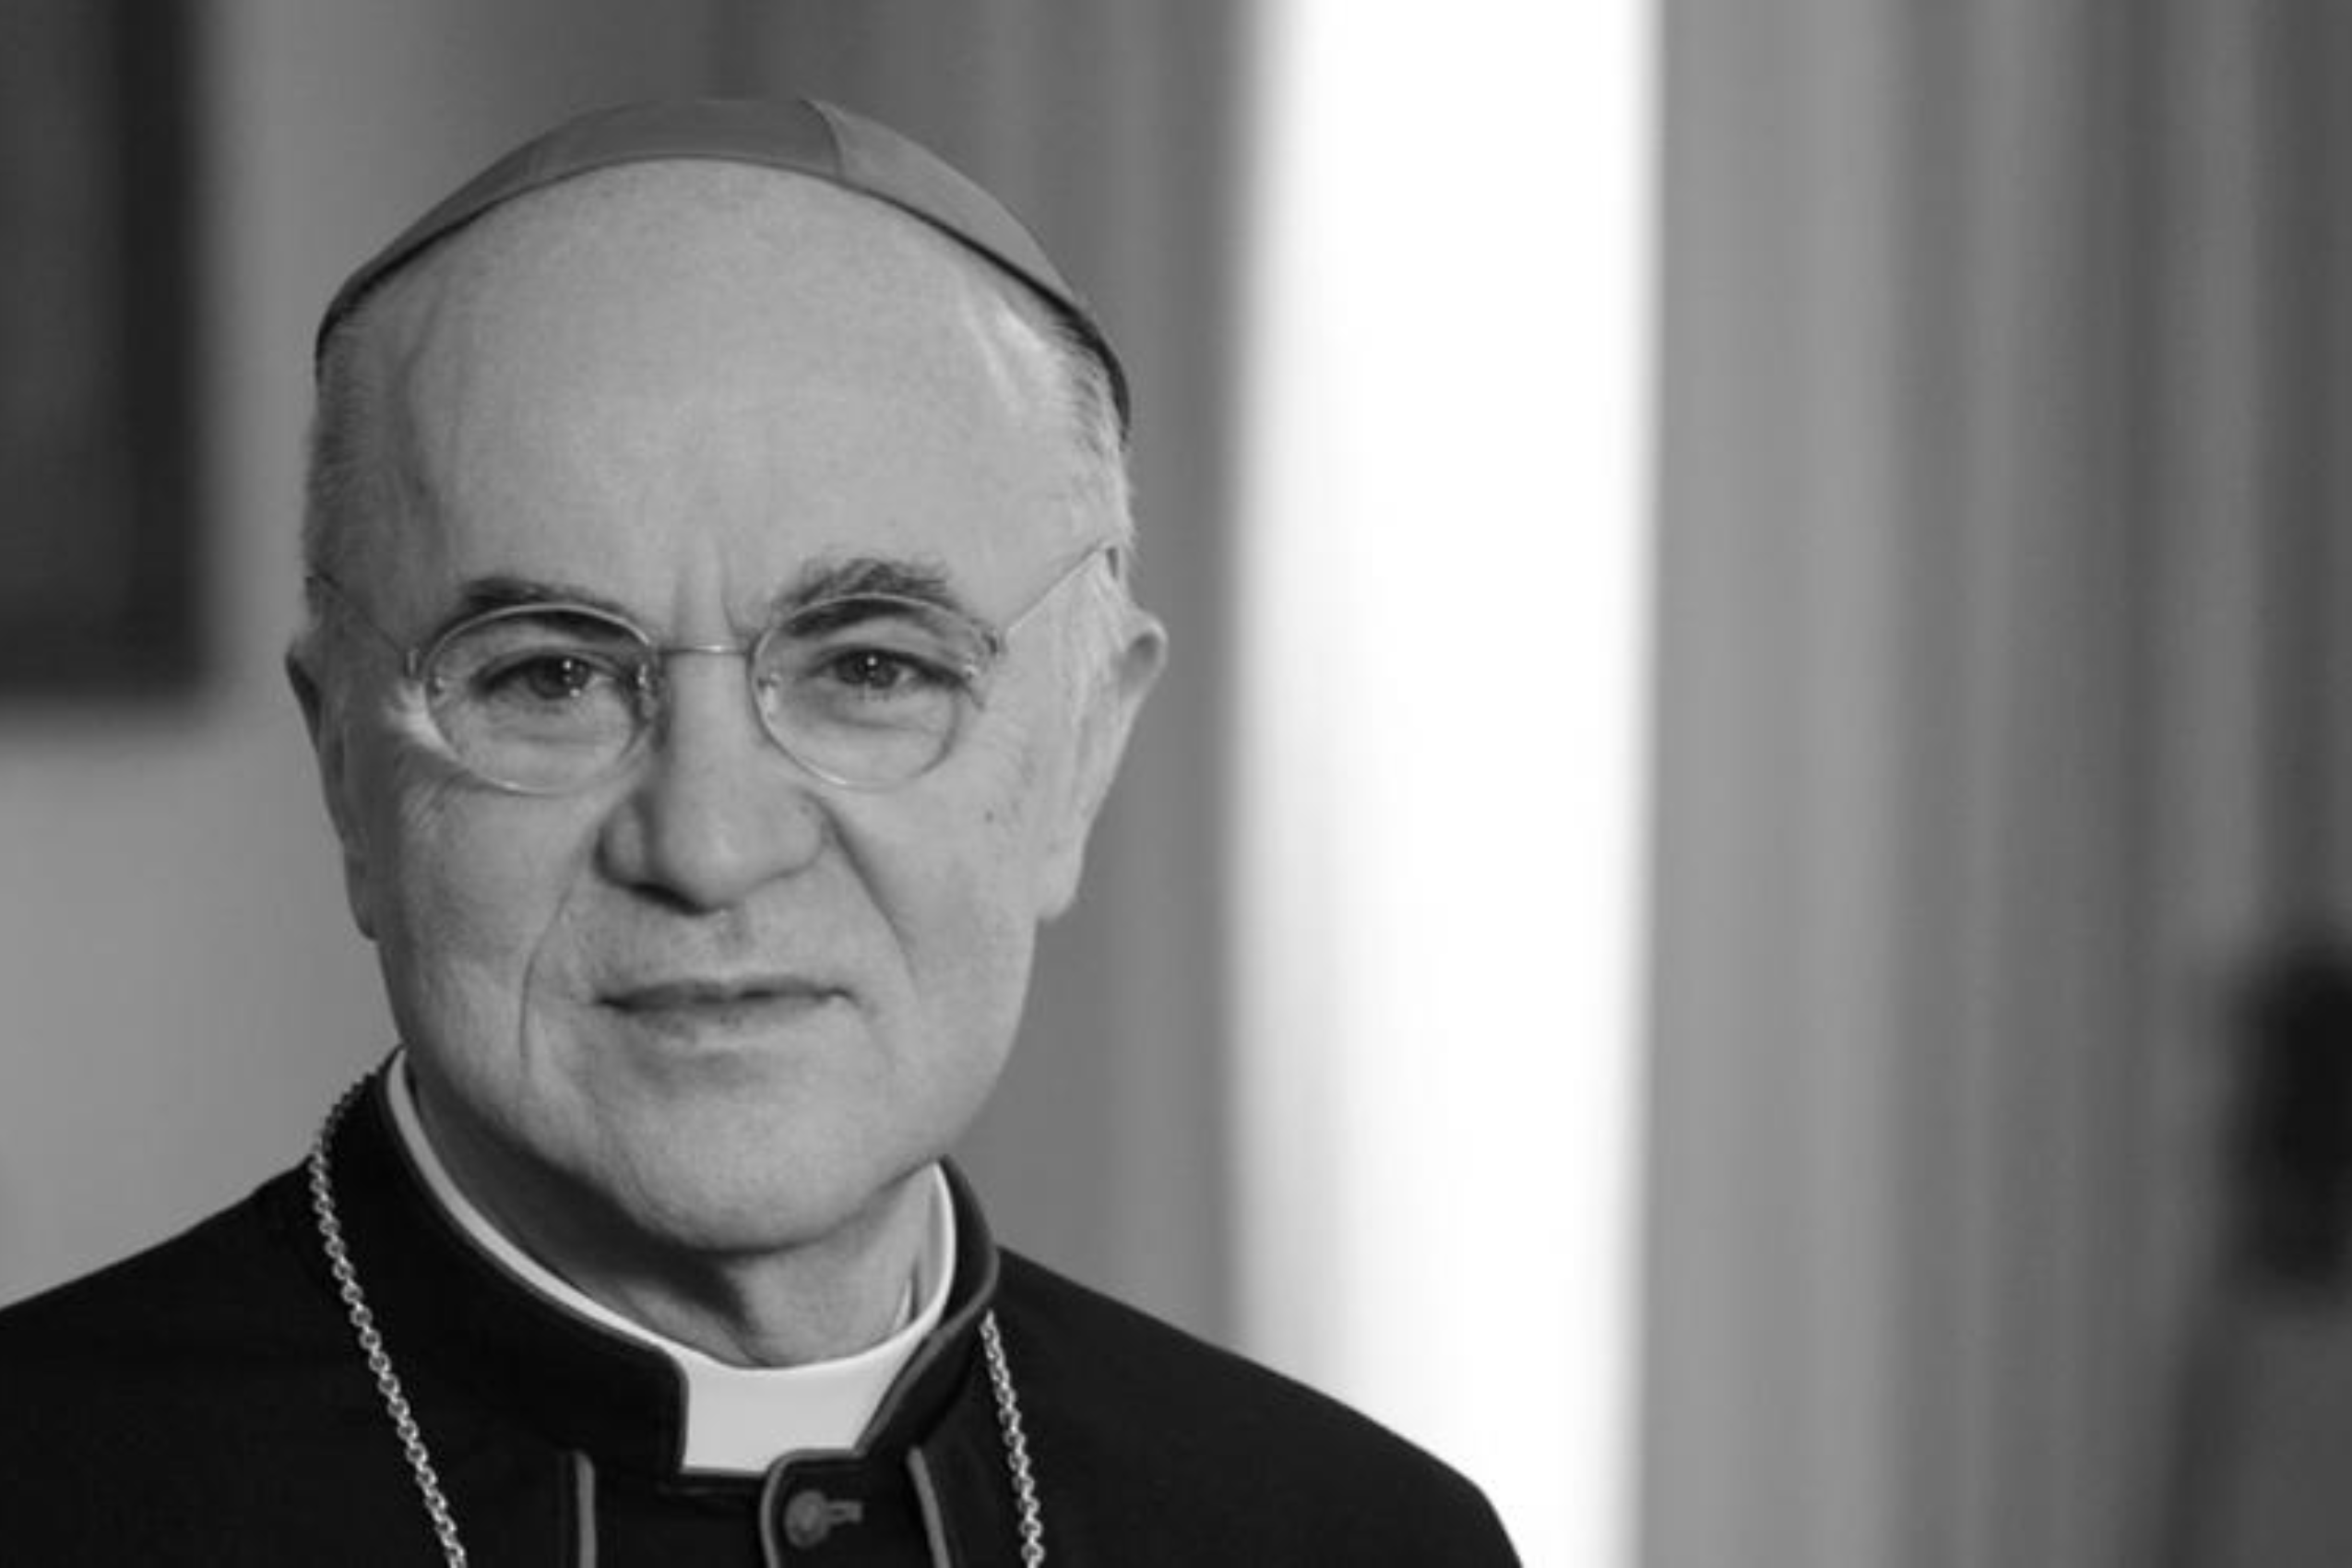 Carlo maria. Архиепископ Вигано. Архиепископ католической церкви.